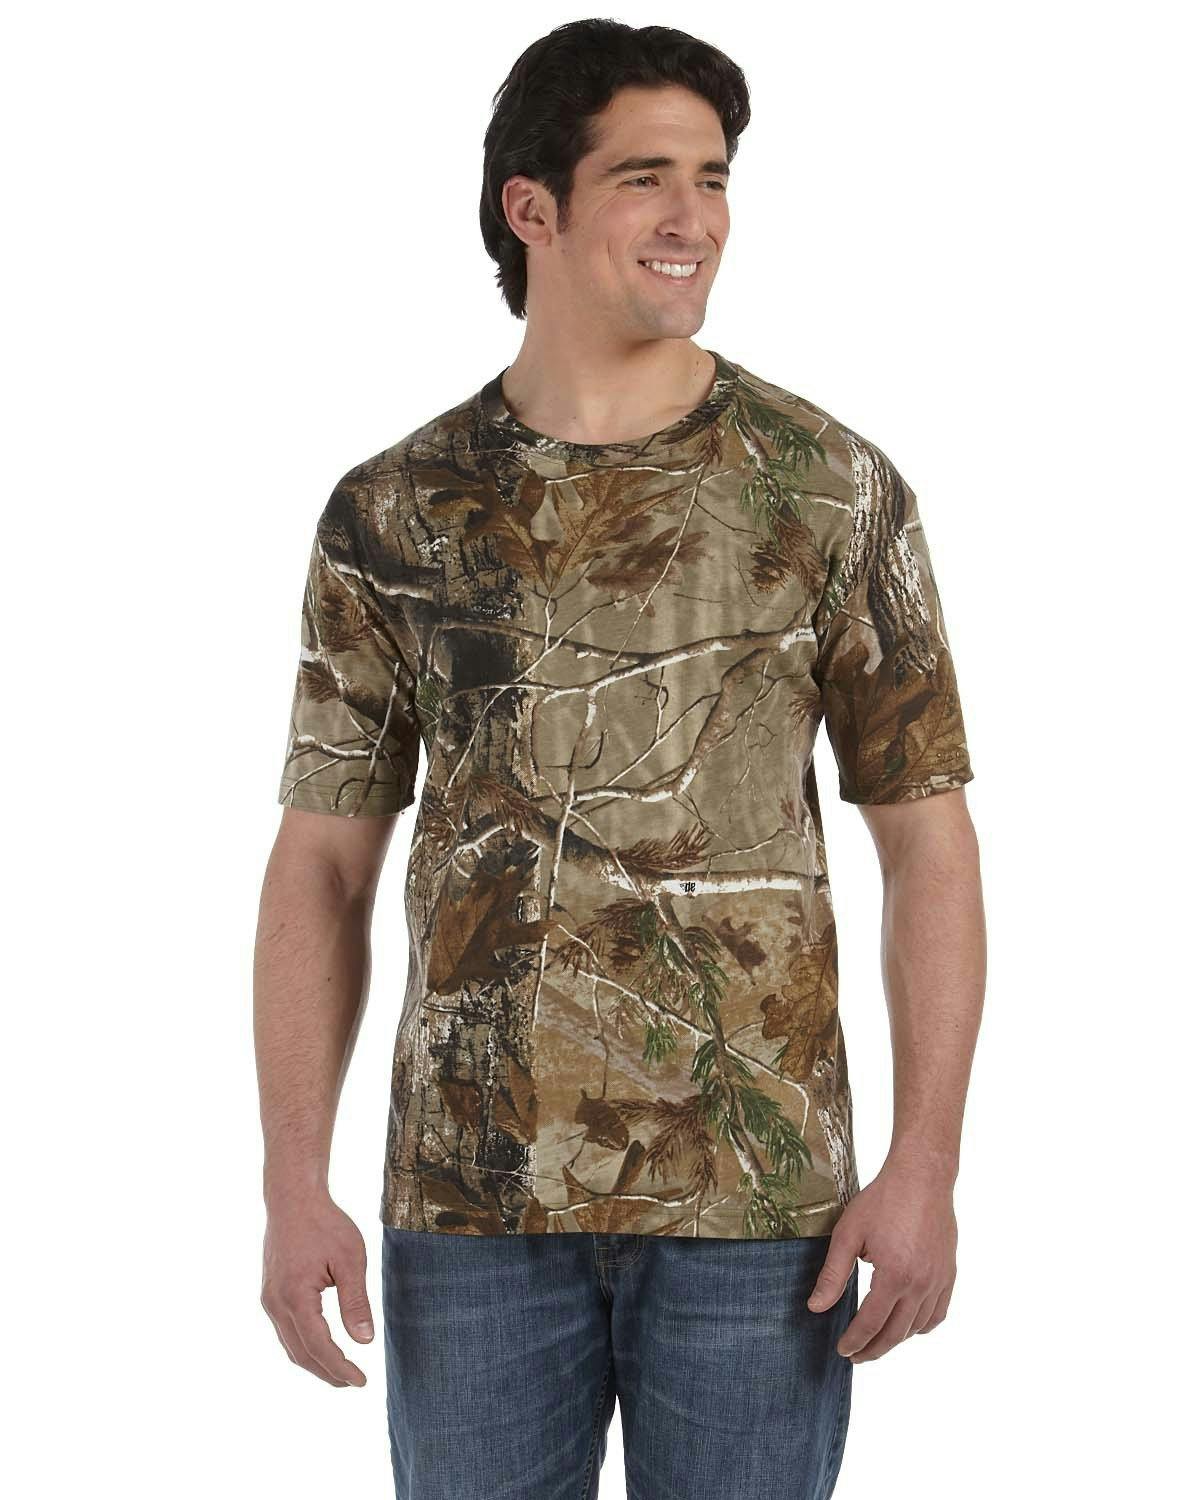 Image for Men's Realtree Camo T-Shirt